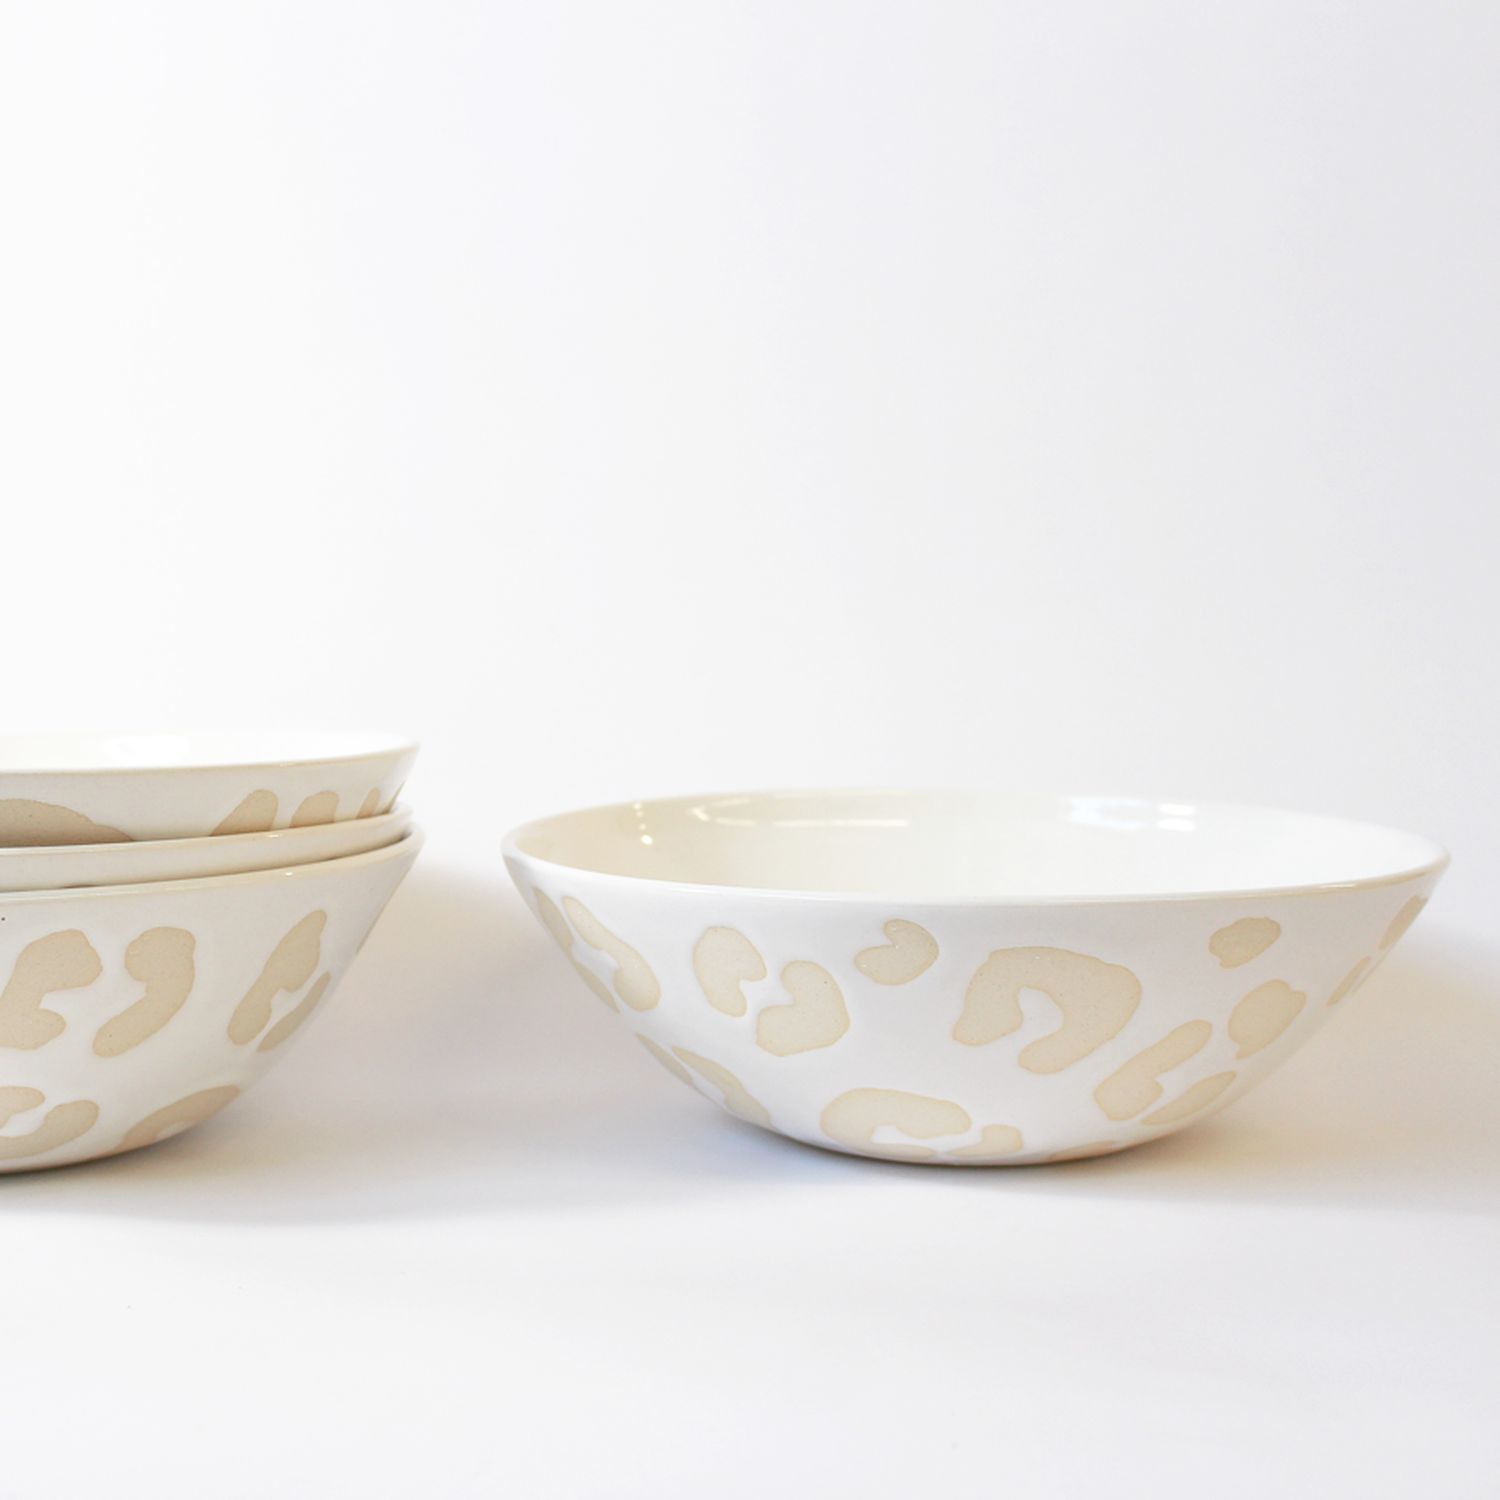 Mima Ceramics: Wide Shallow Bowl White Product Image 1 of 1